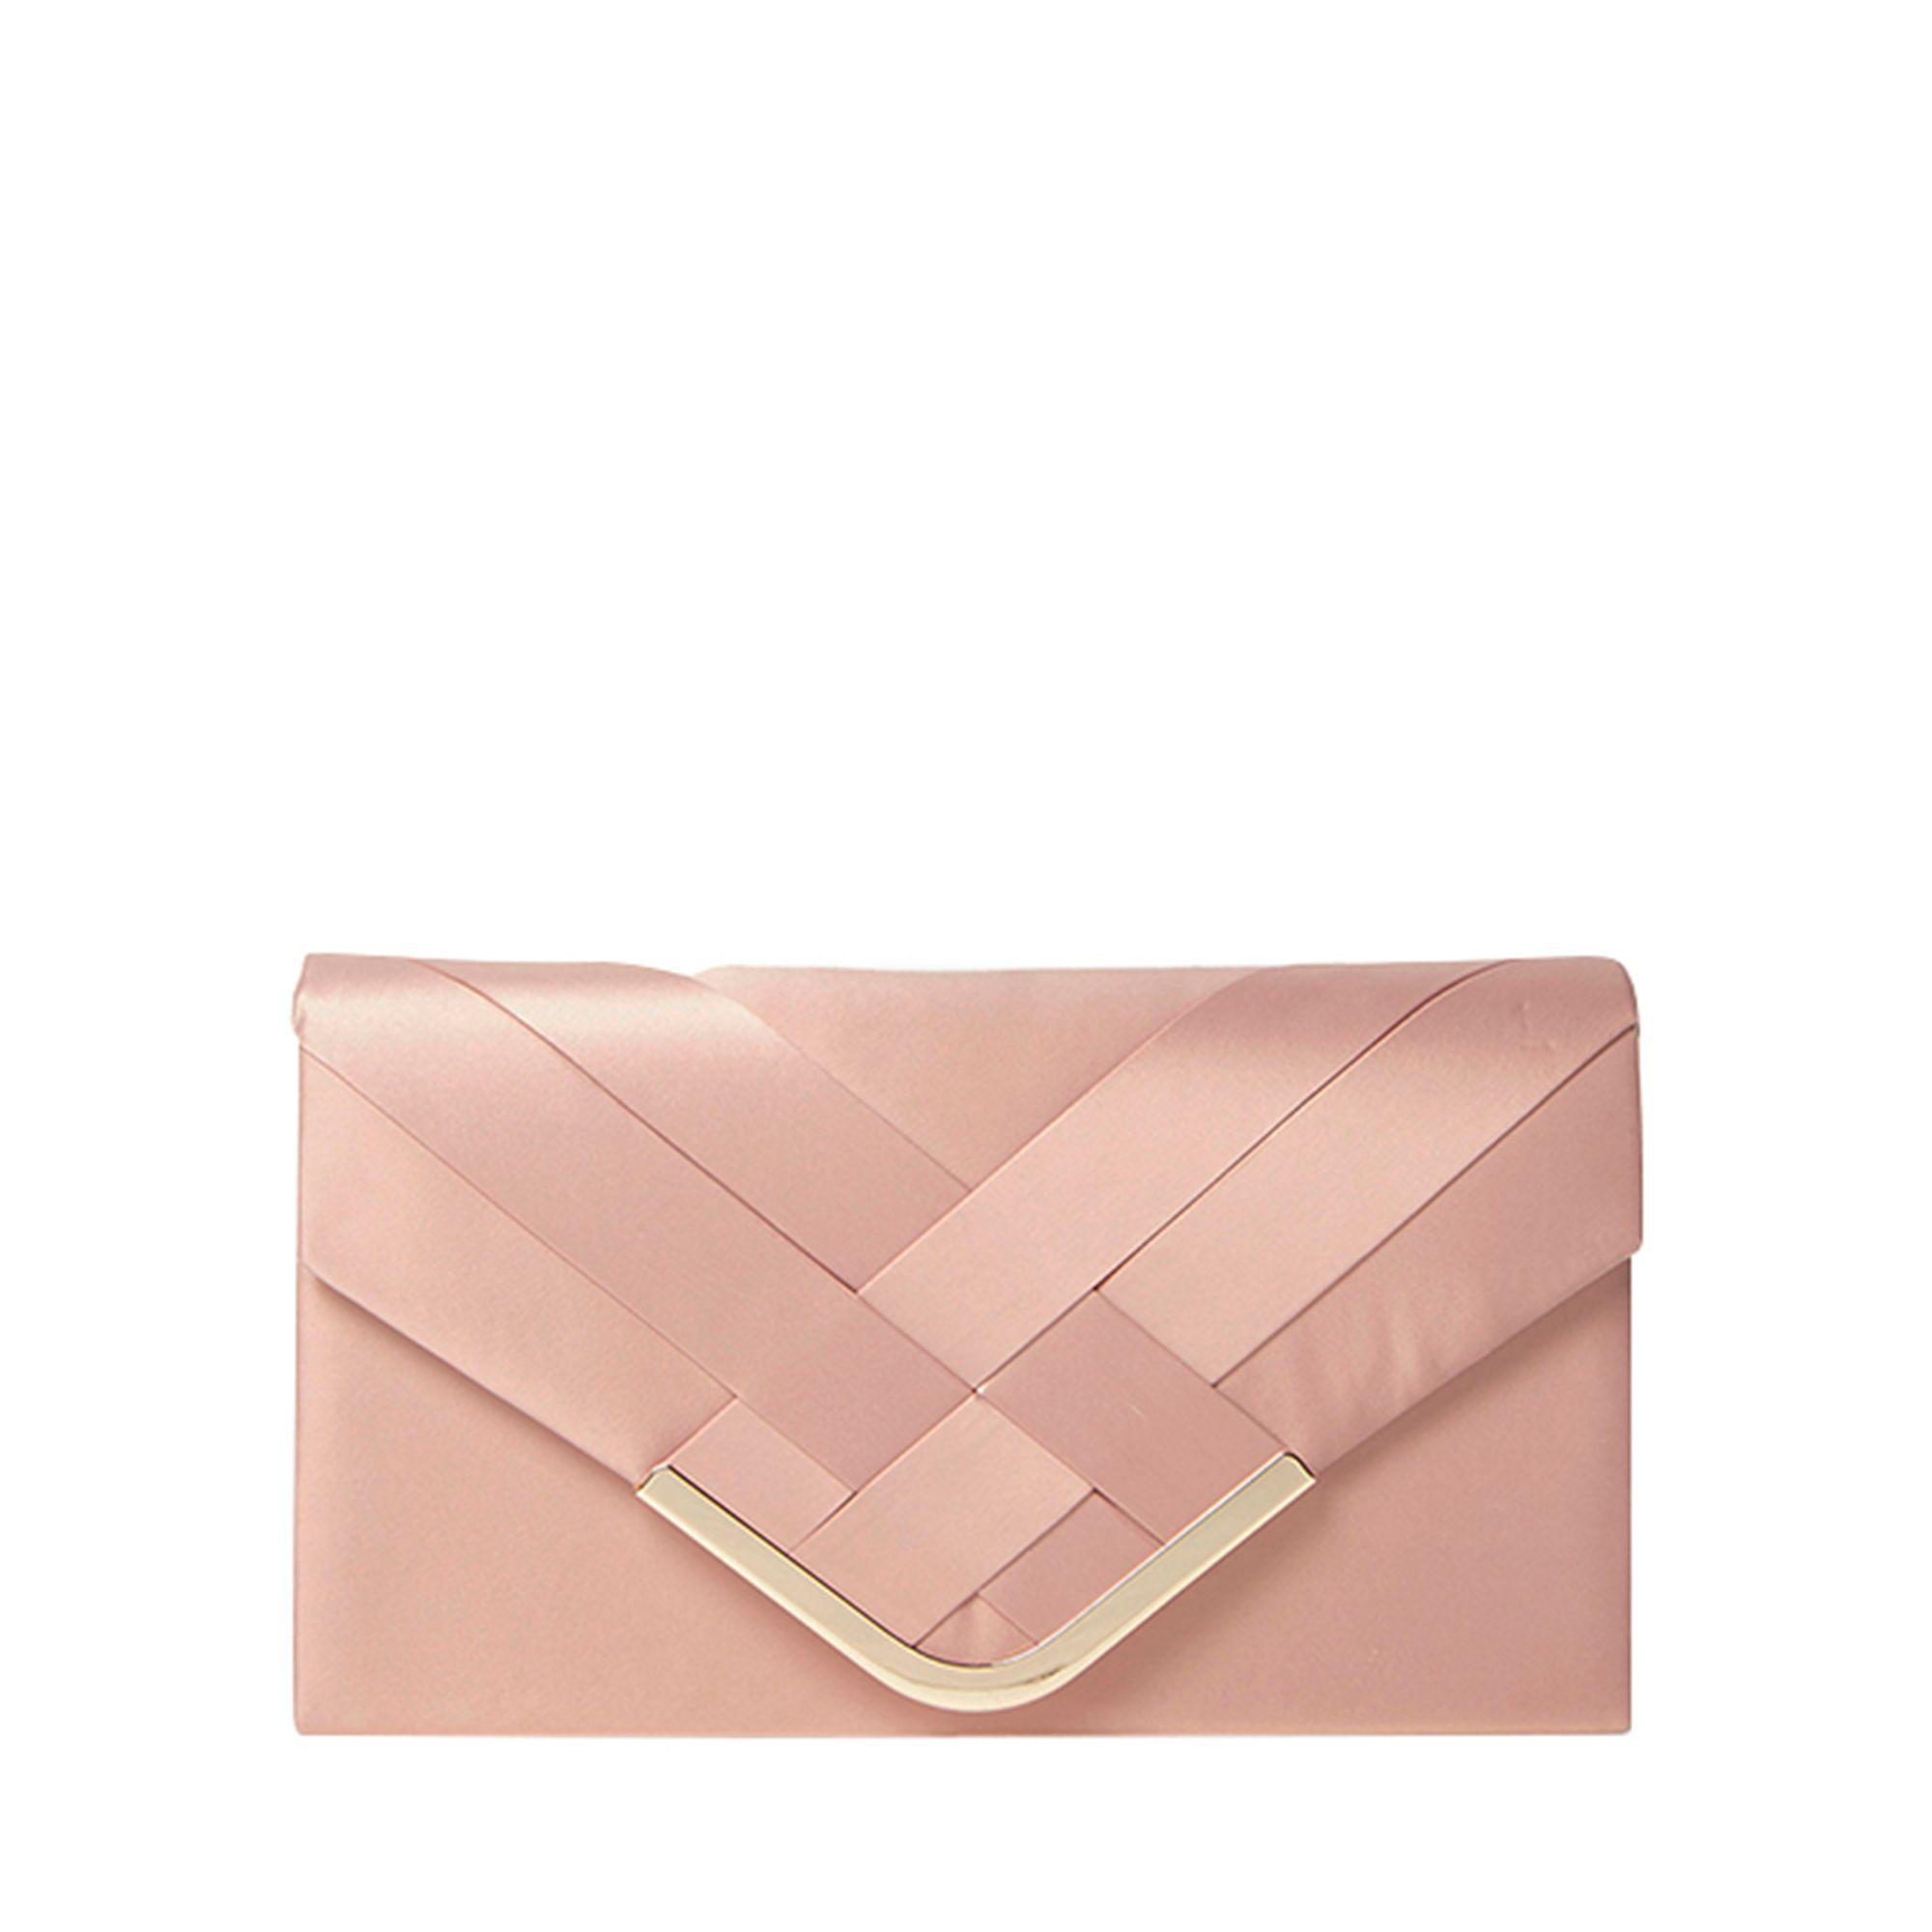 Dorothy Perkins Blush Pleat Chain Clutch Bag in Pink - Lyst